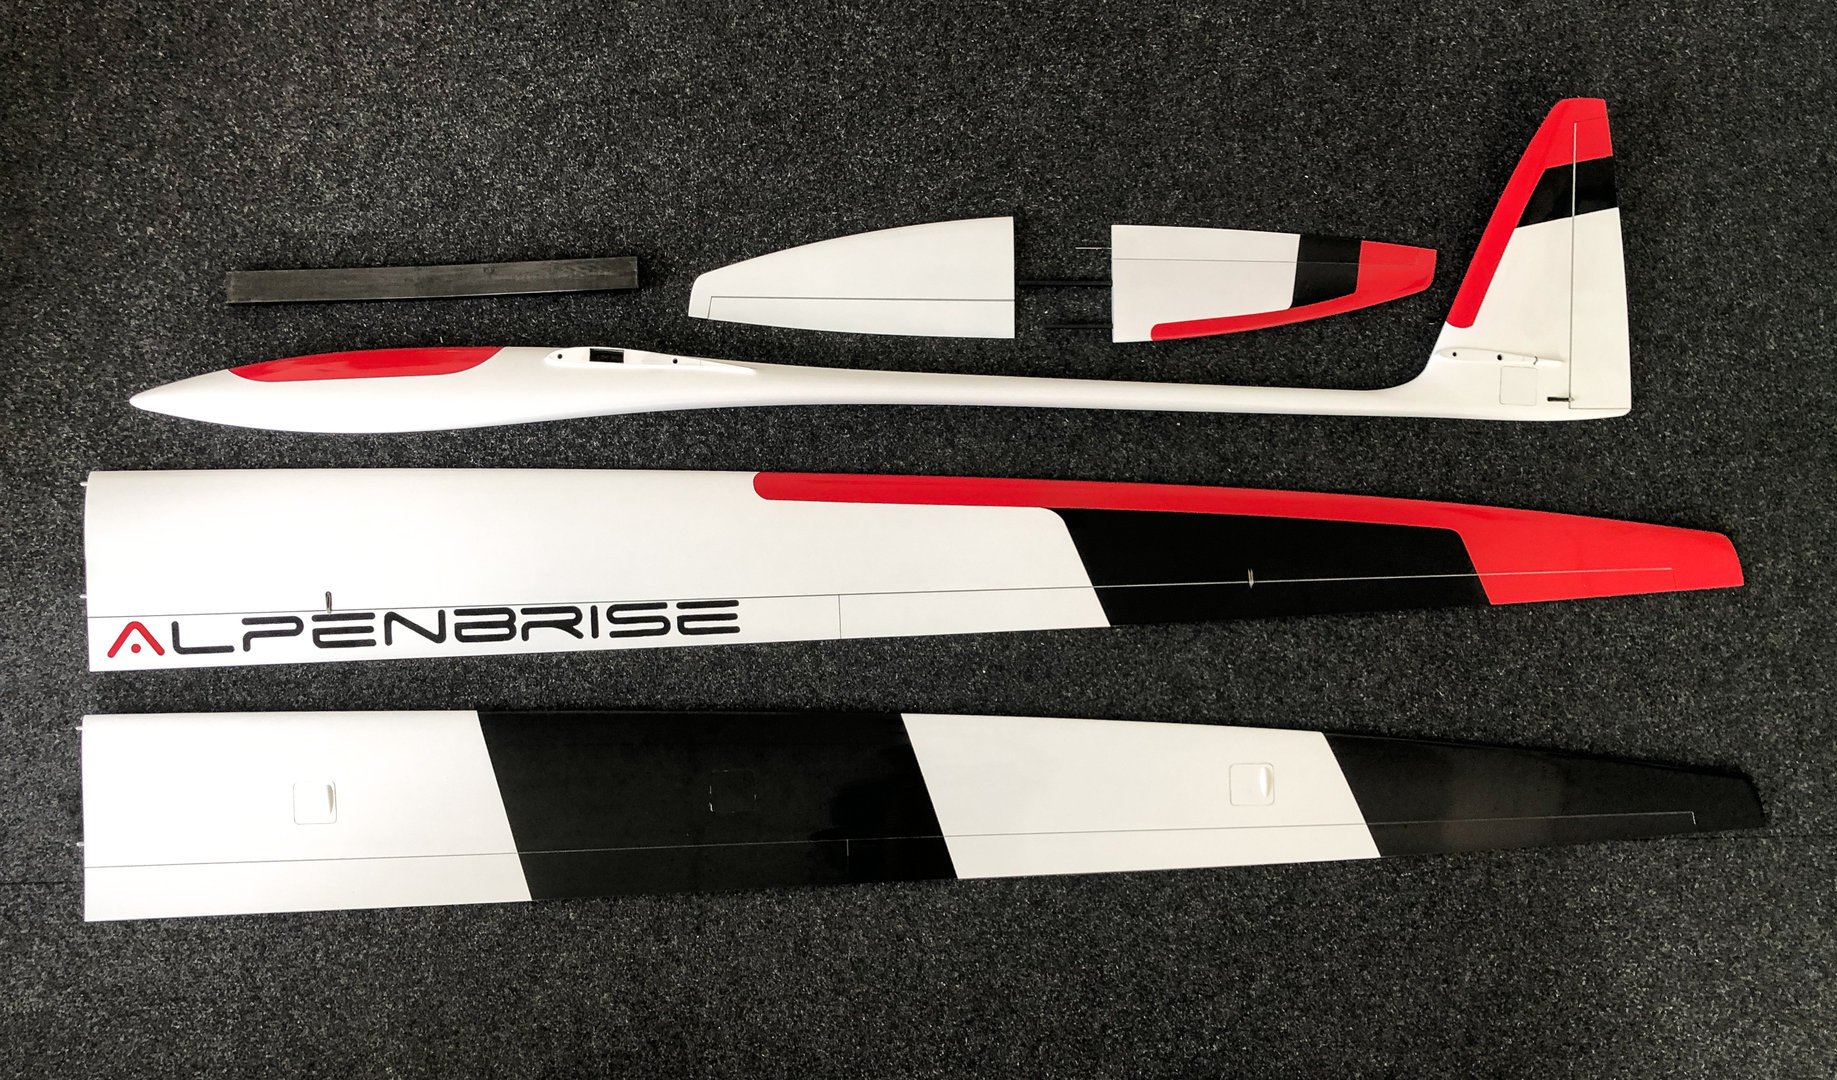 Alpenbrise 4.0 Aeroic Composite